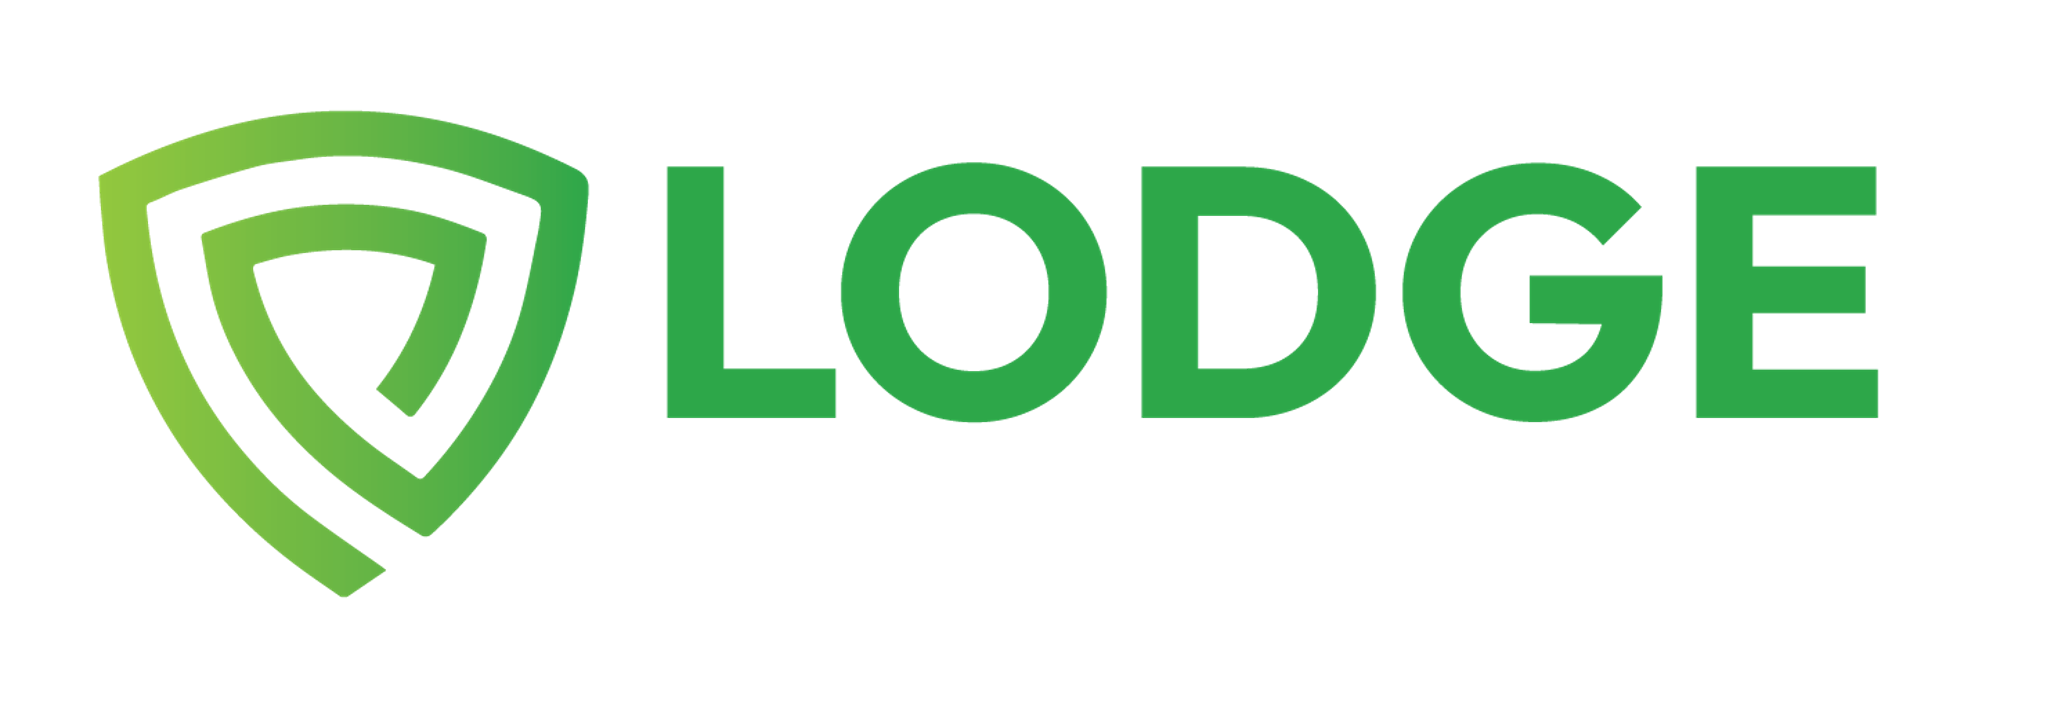 Lodge create logo